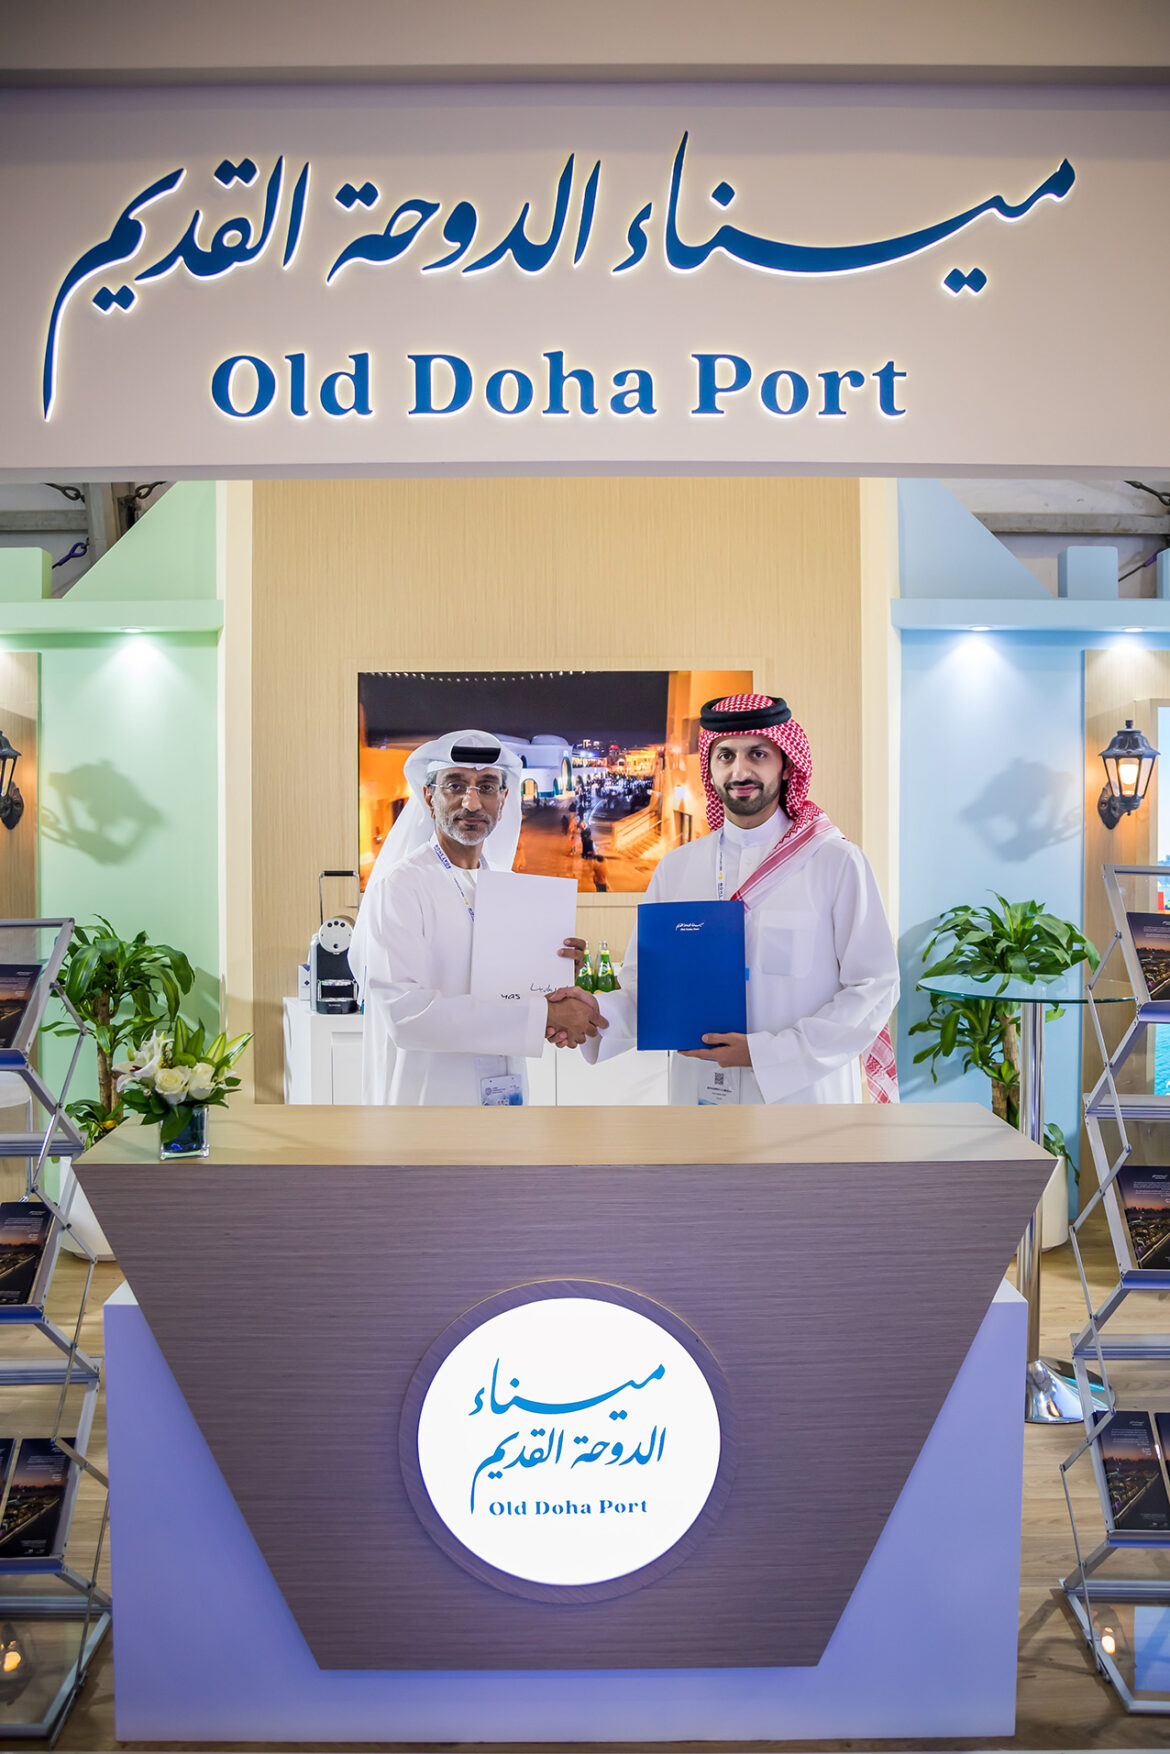 Old Doha Port and Yas Marina, Abu Dhabi: A Partnership for Maritime Tourism